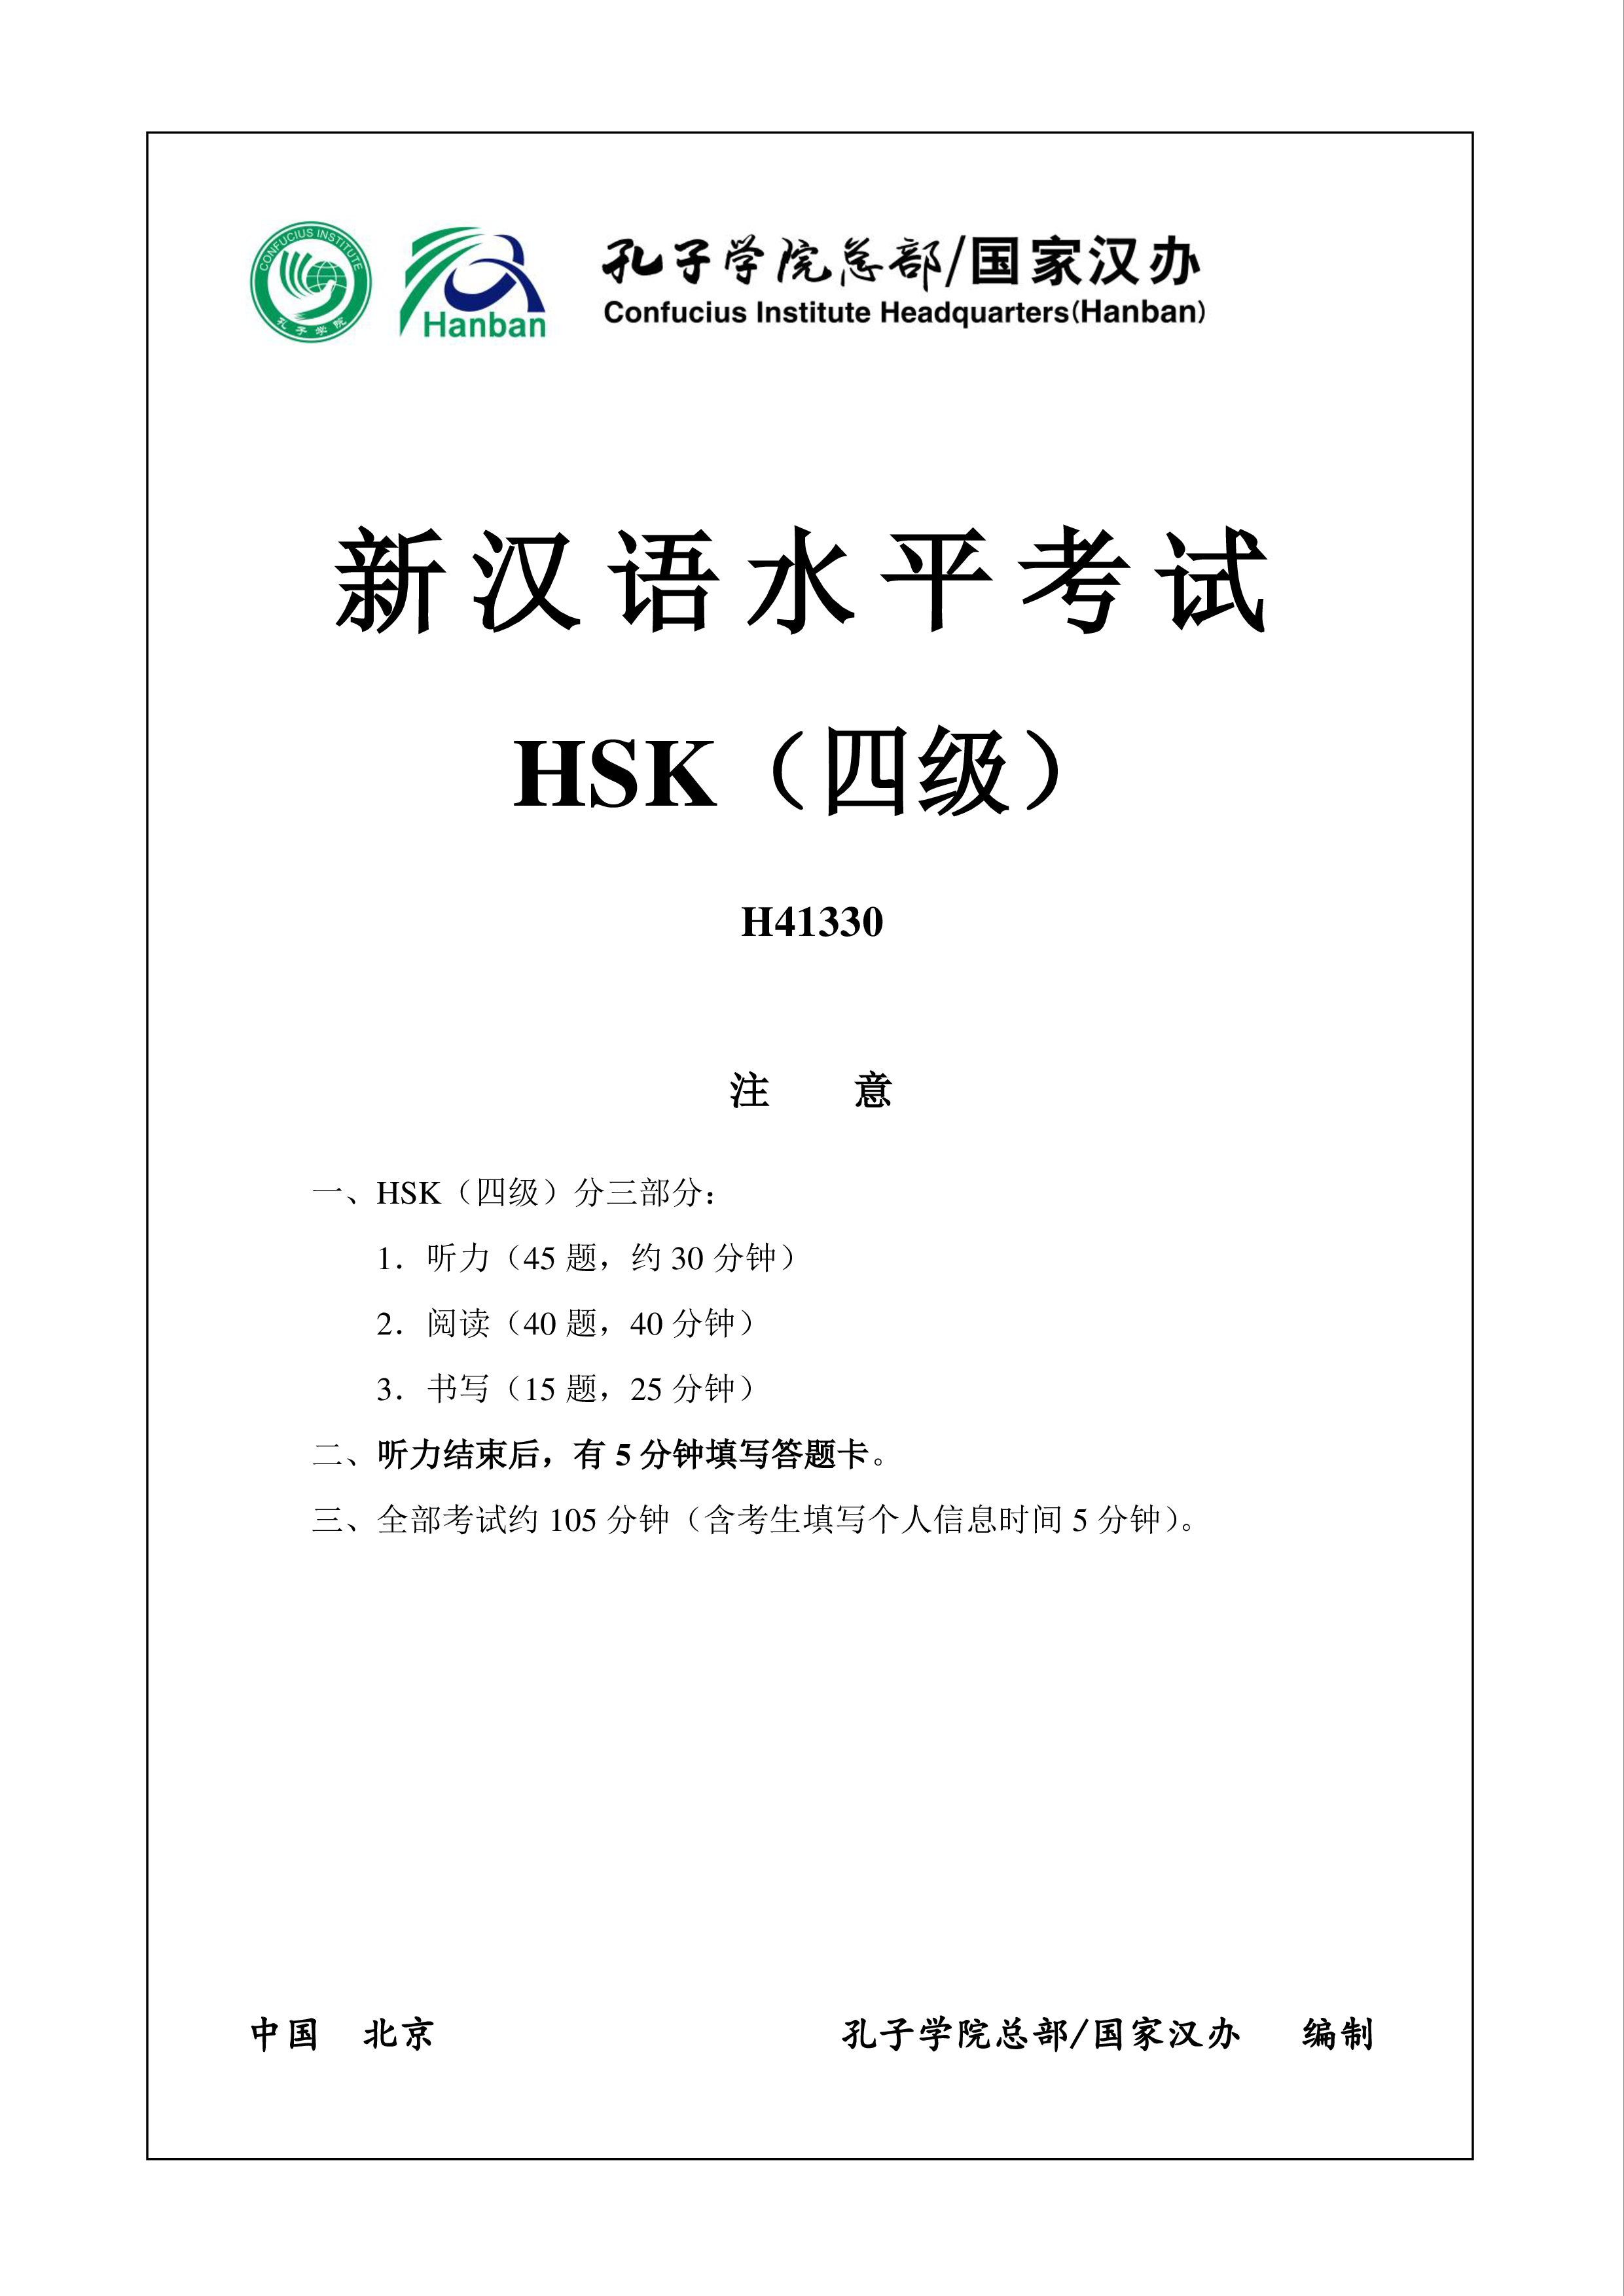 HSK4 Chinees Examen H41330 模板